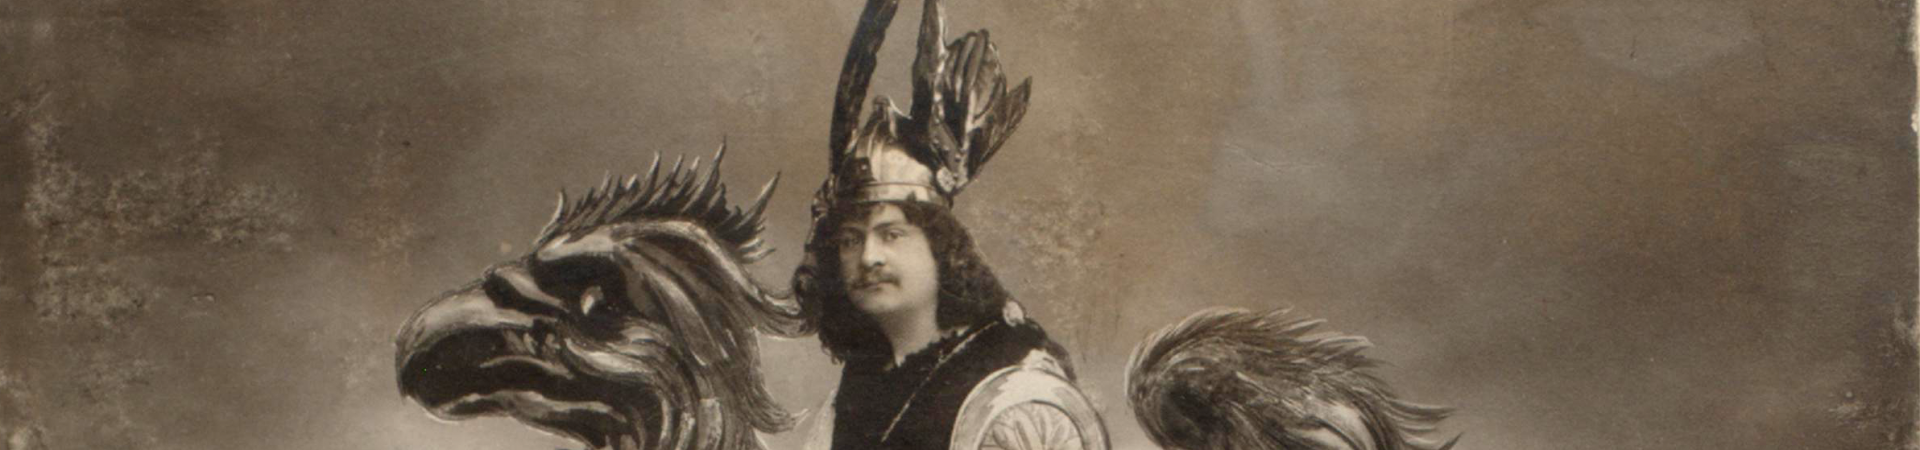 Et Kättche vun Kölle - Divertissementchen 1914 - Solist in Fantasiekostüm reitet auf Fabelwesen